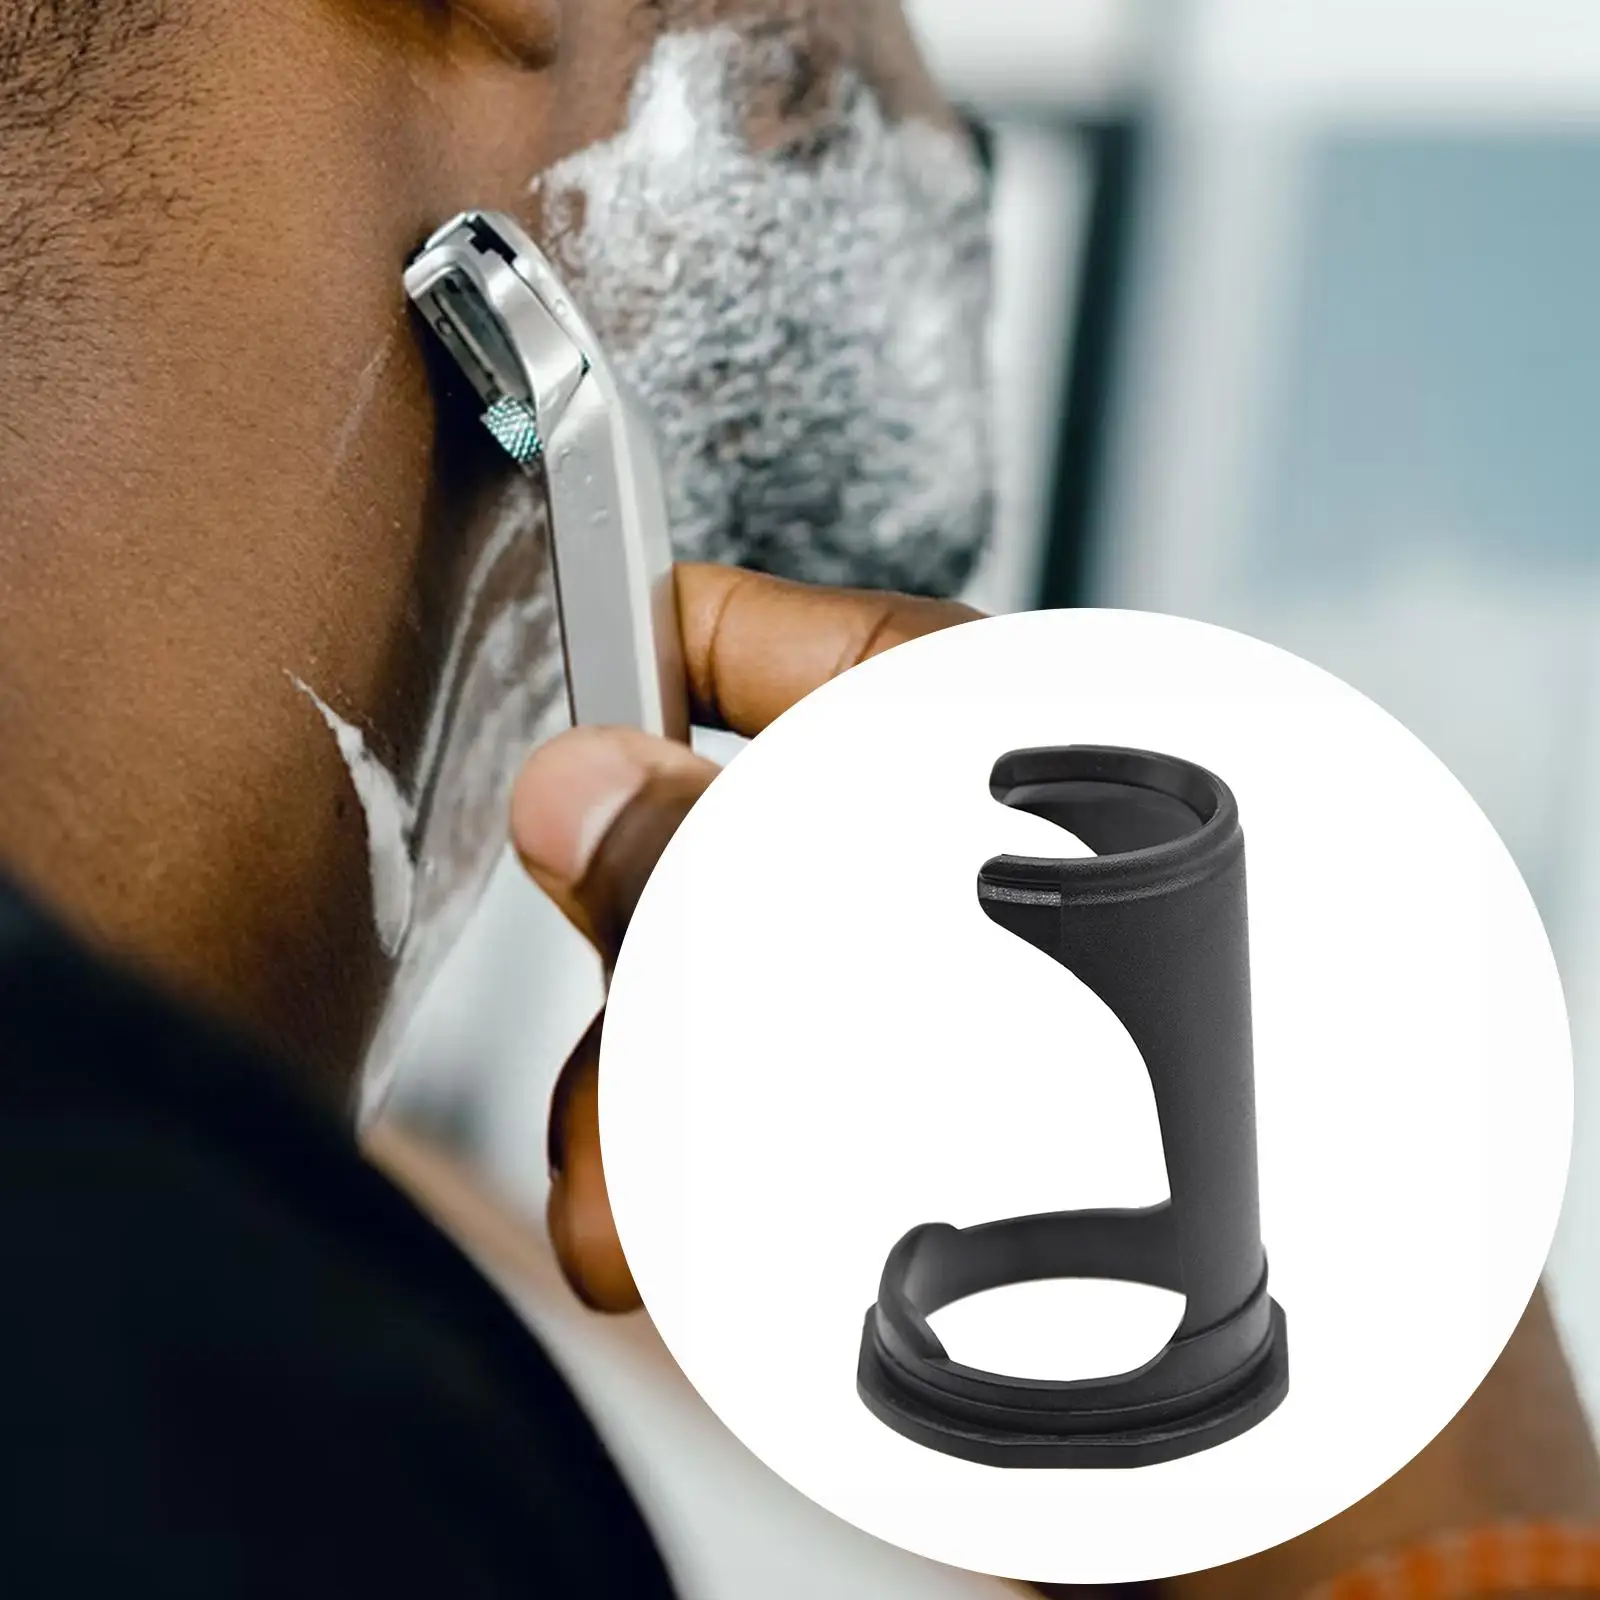 Practical Shave Brush Stand Organizer Safety Shaver Holder support Salon Bathroom Prolong skin care